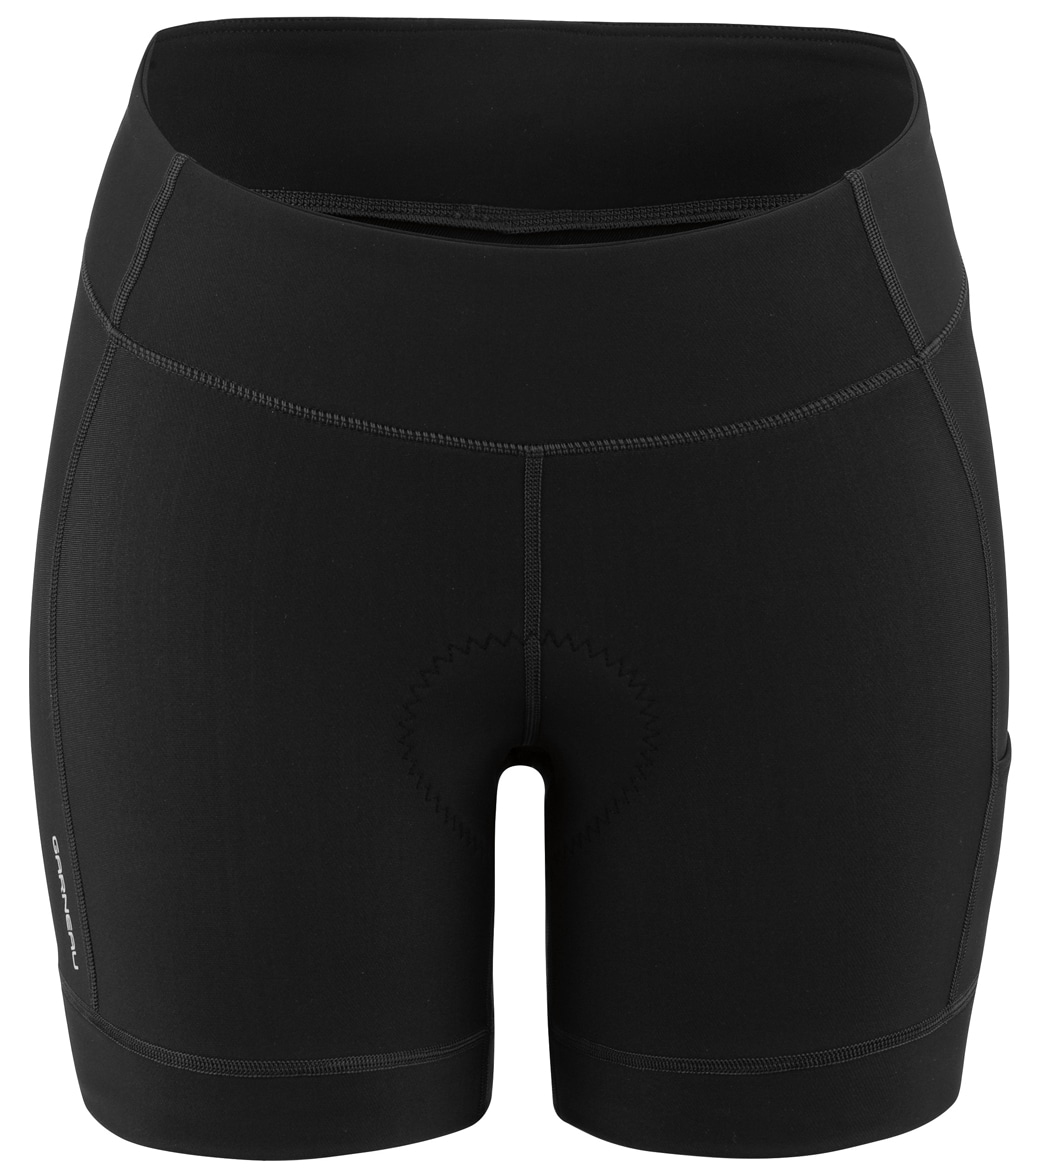 Louis Garneau Women's Fit Sensor 2 5.5 Cycling Short - Black Small - Swimoutlet.com